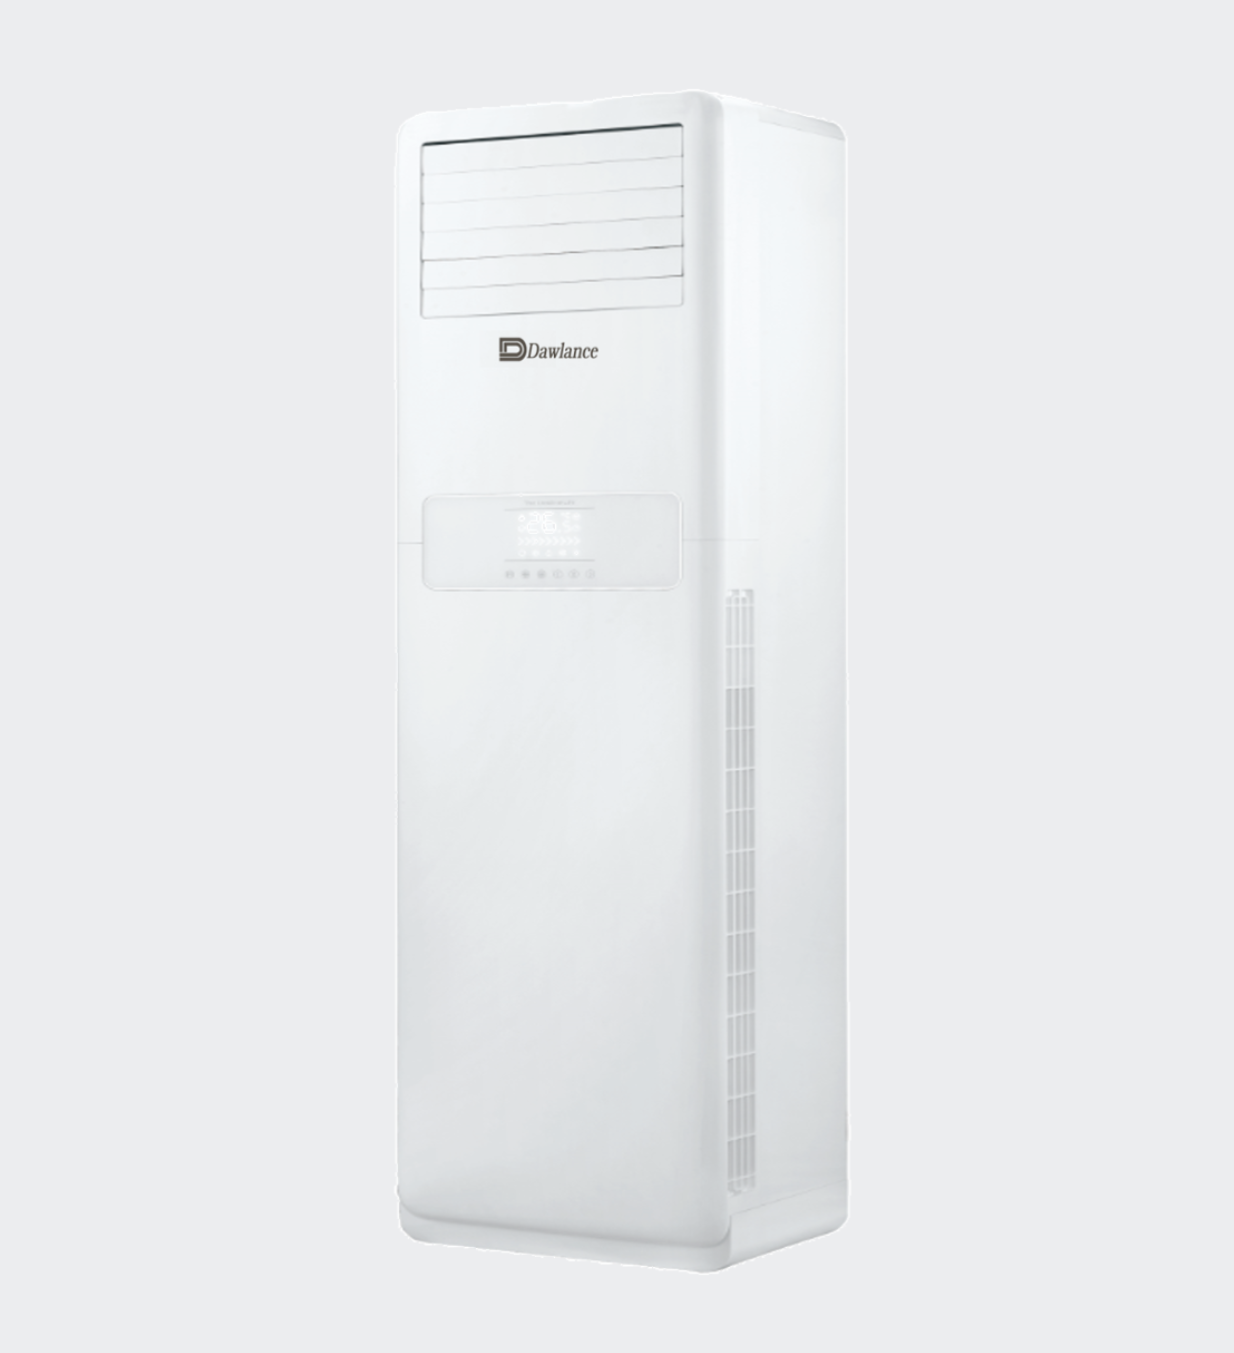 Dawlance FS-45 Floor Standing Split Air Conditioner